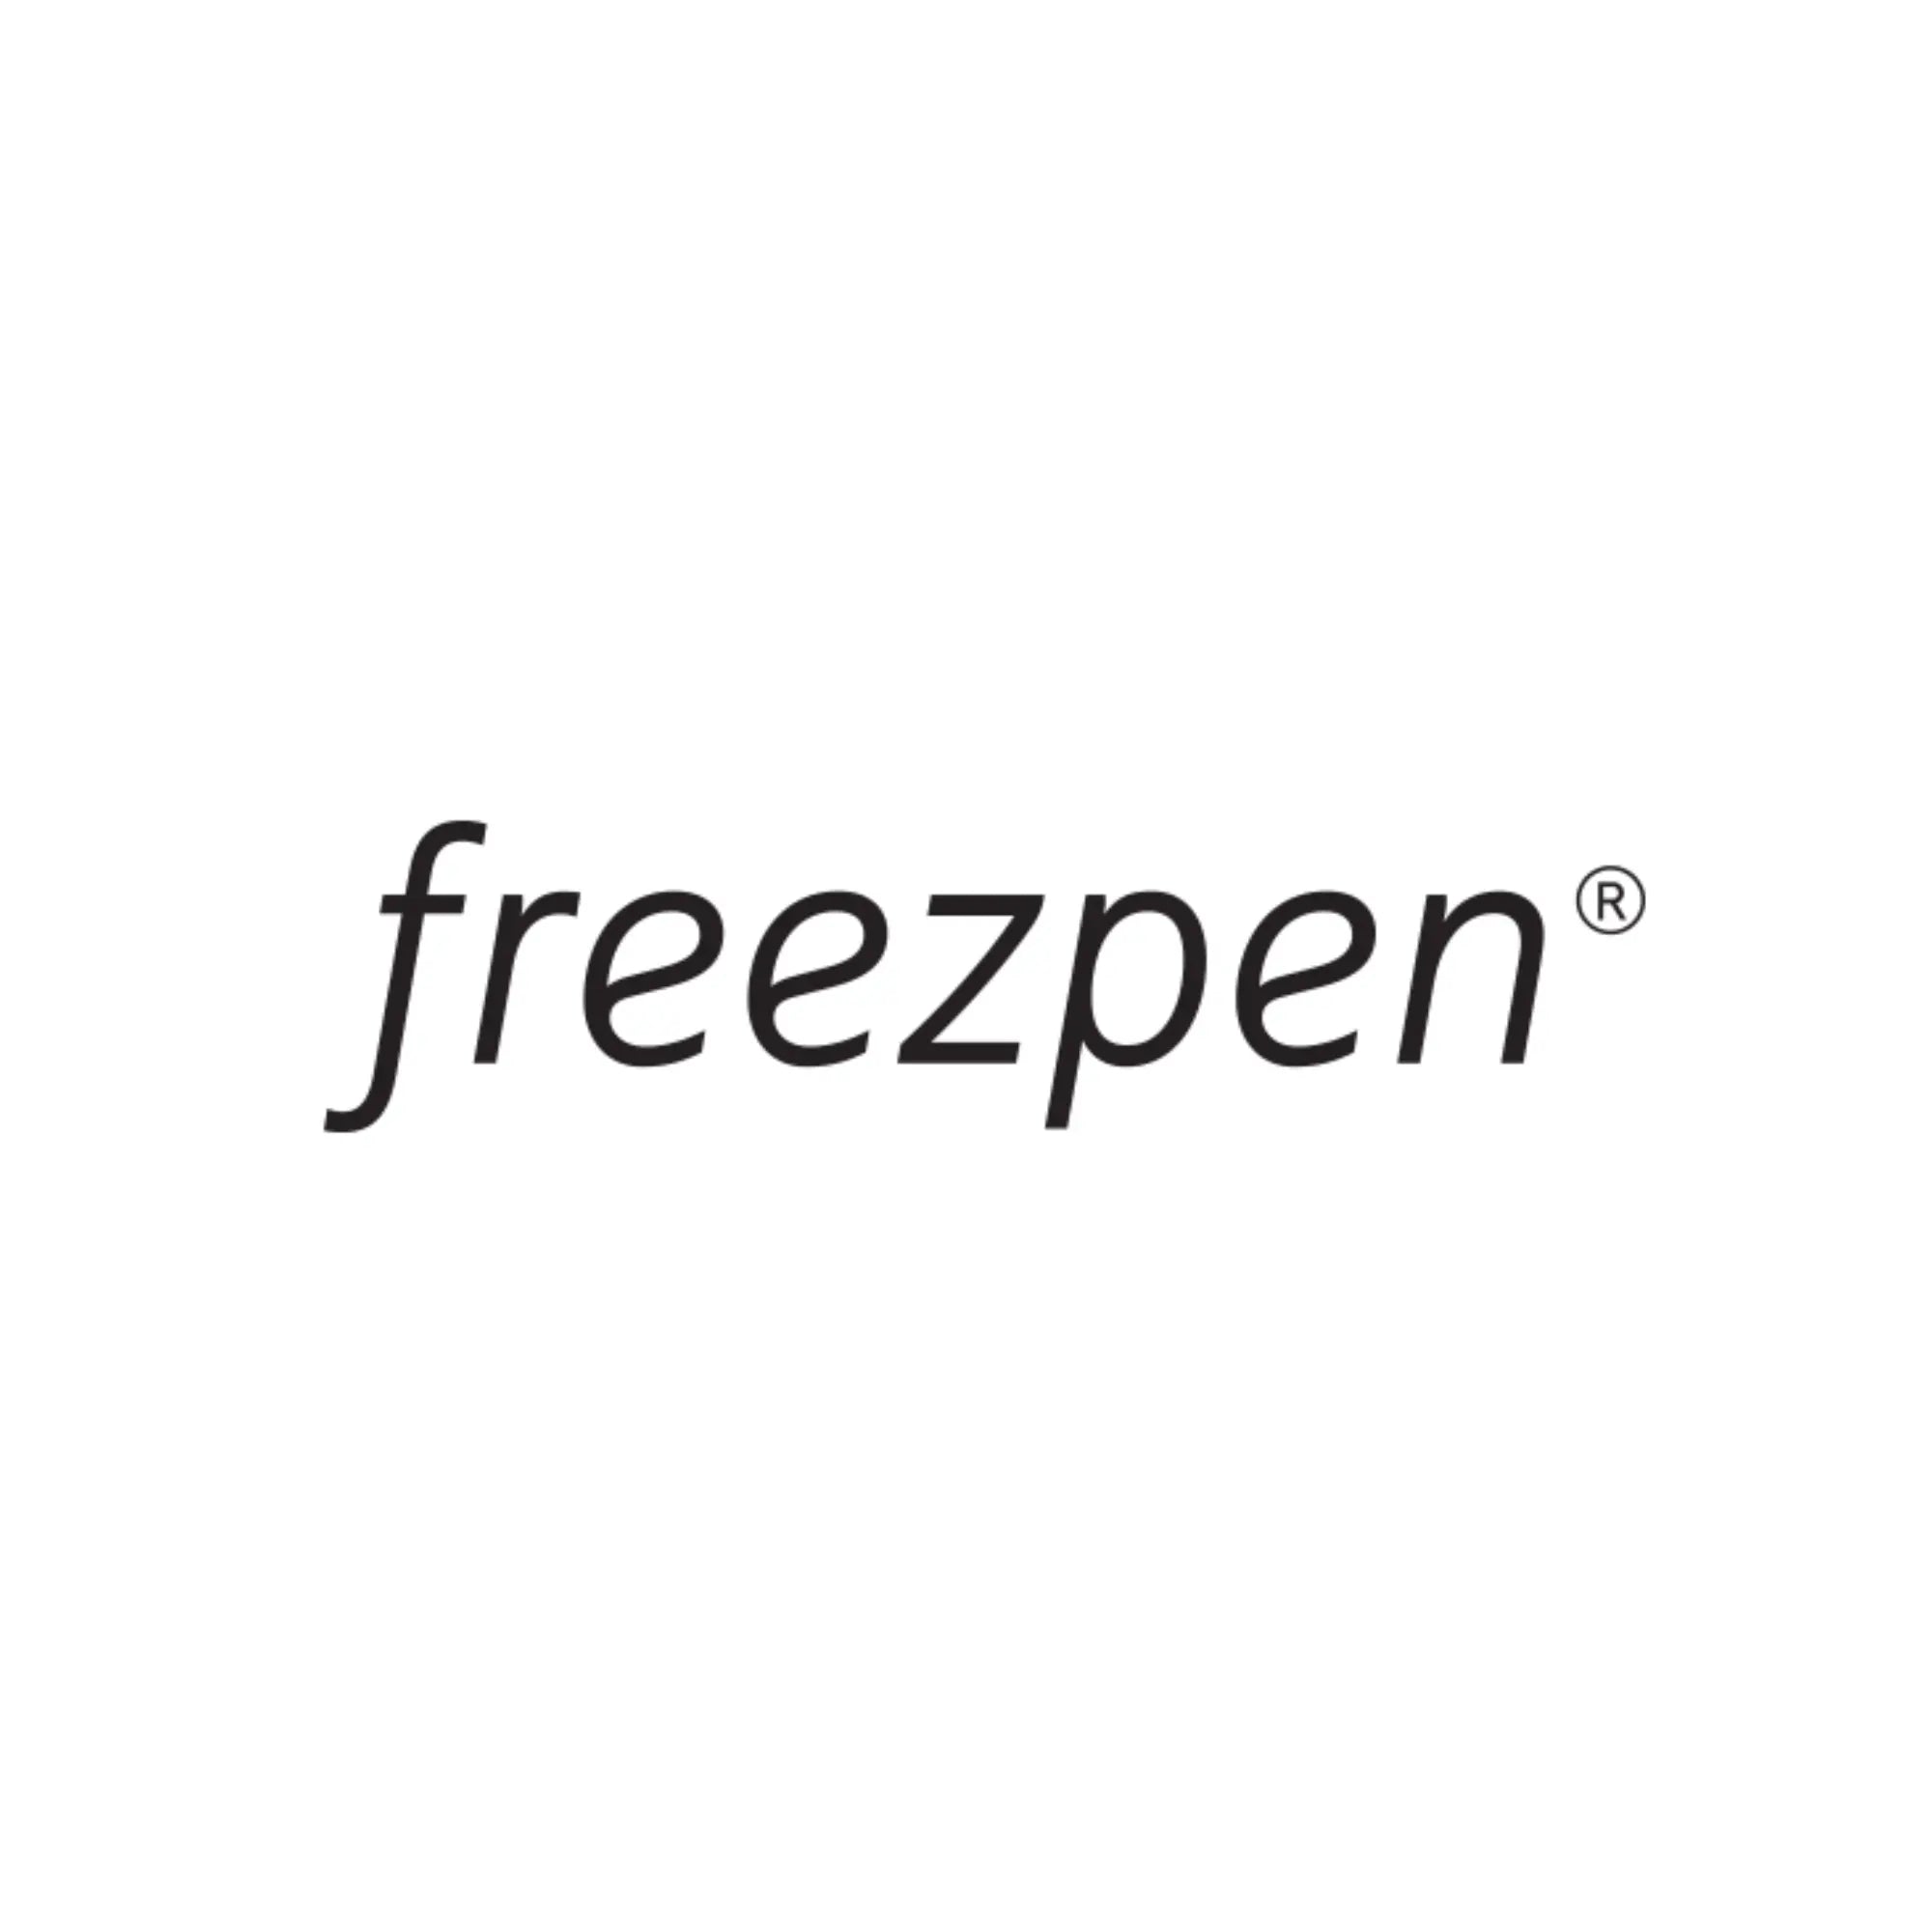 Freezpen My Podologie